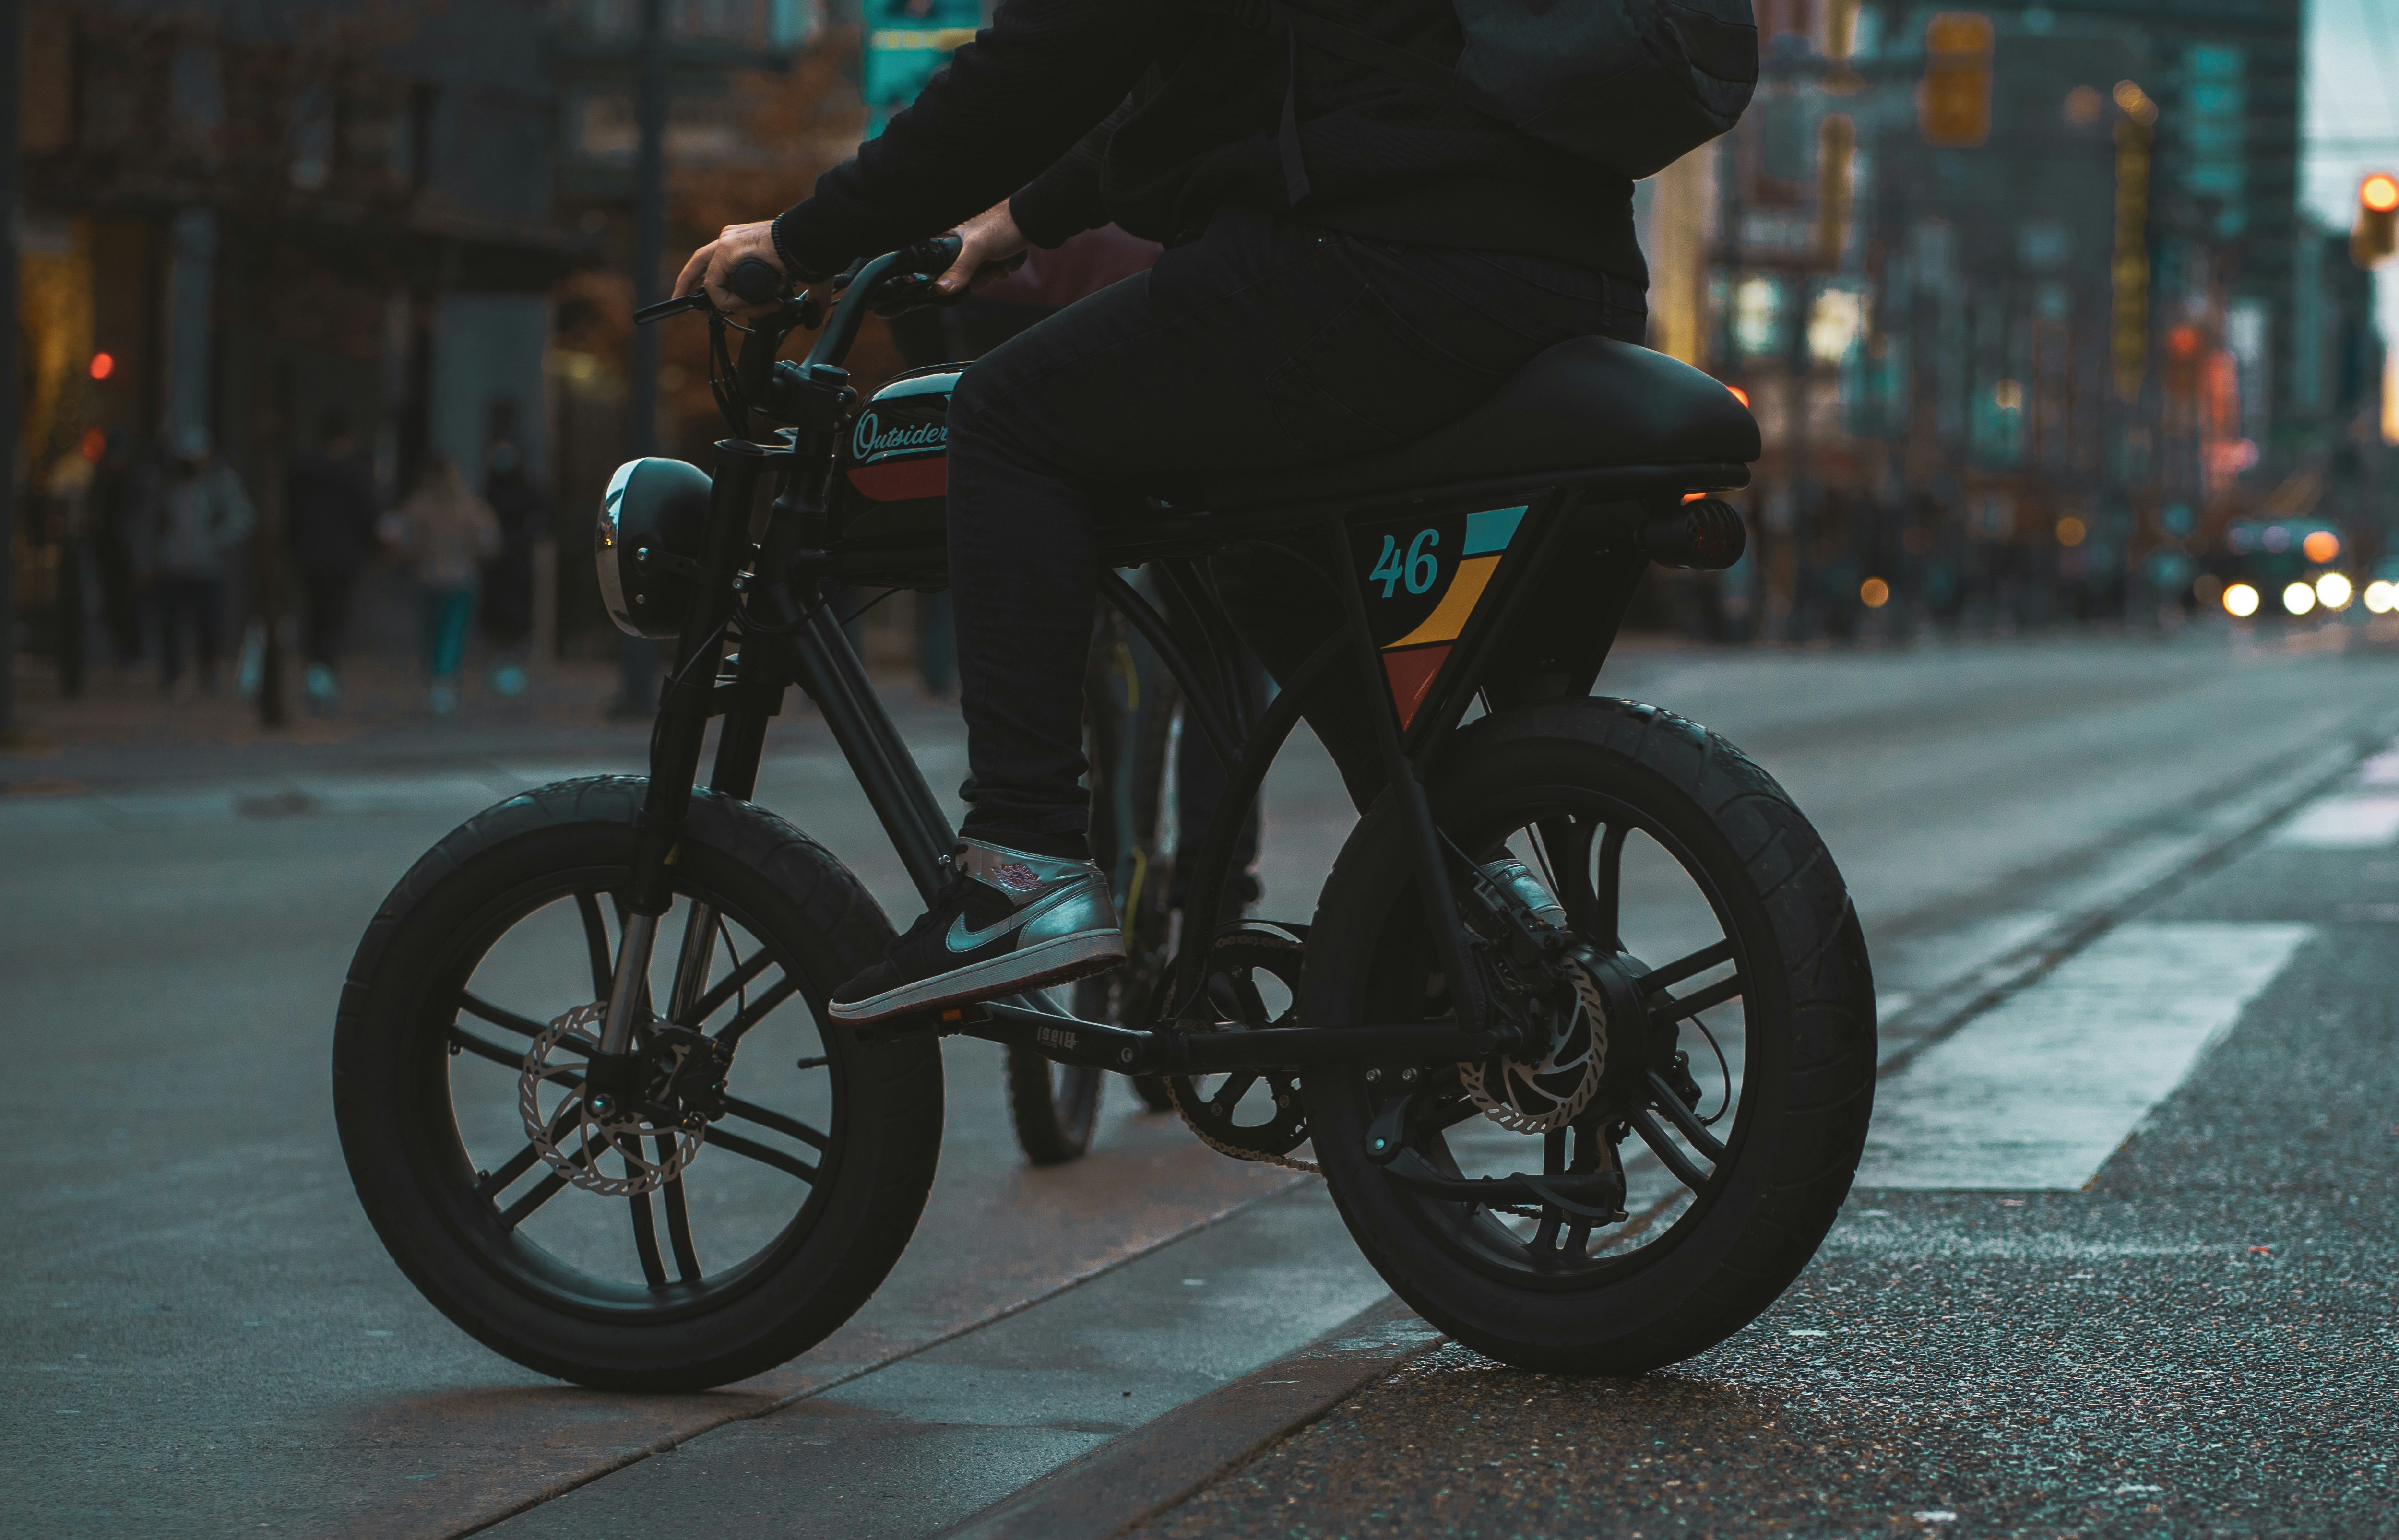 man in black jacket riding on black motorcycle